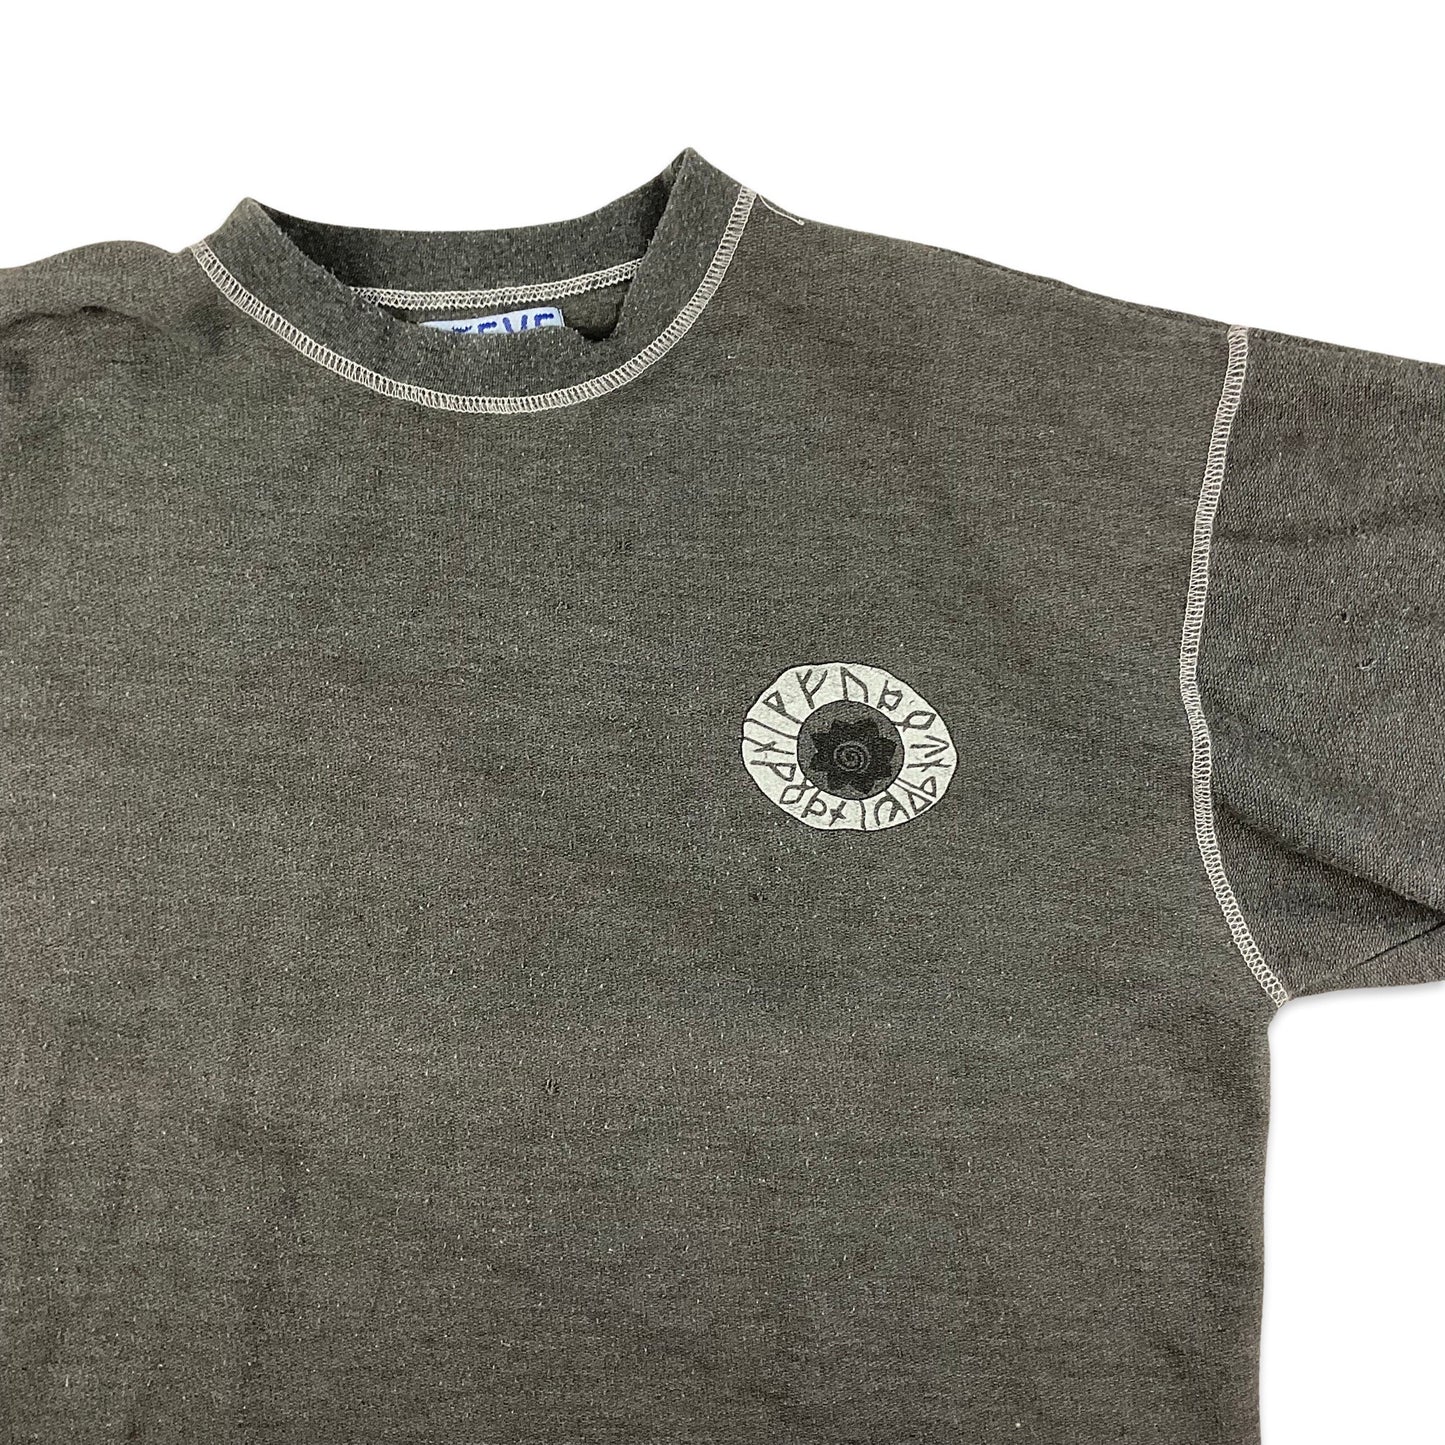 Vintage Grey Graphic Print Sweatshirt L XL